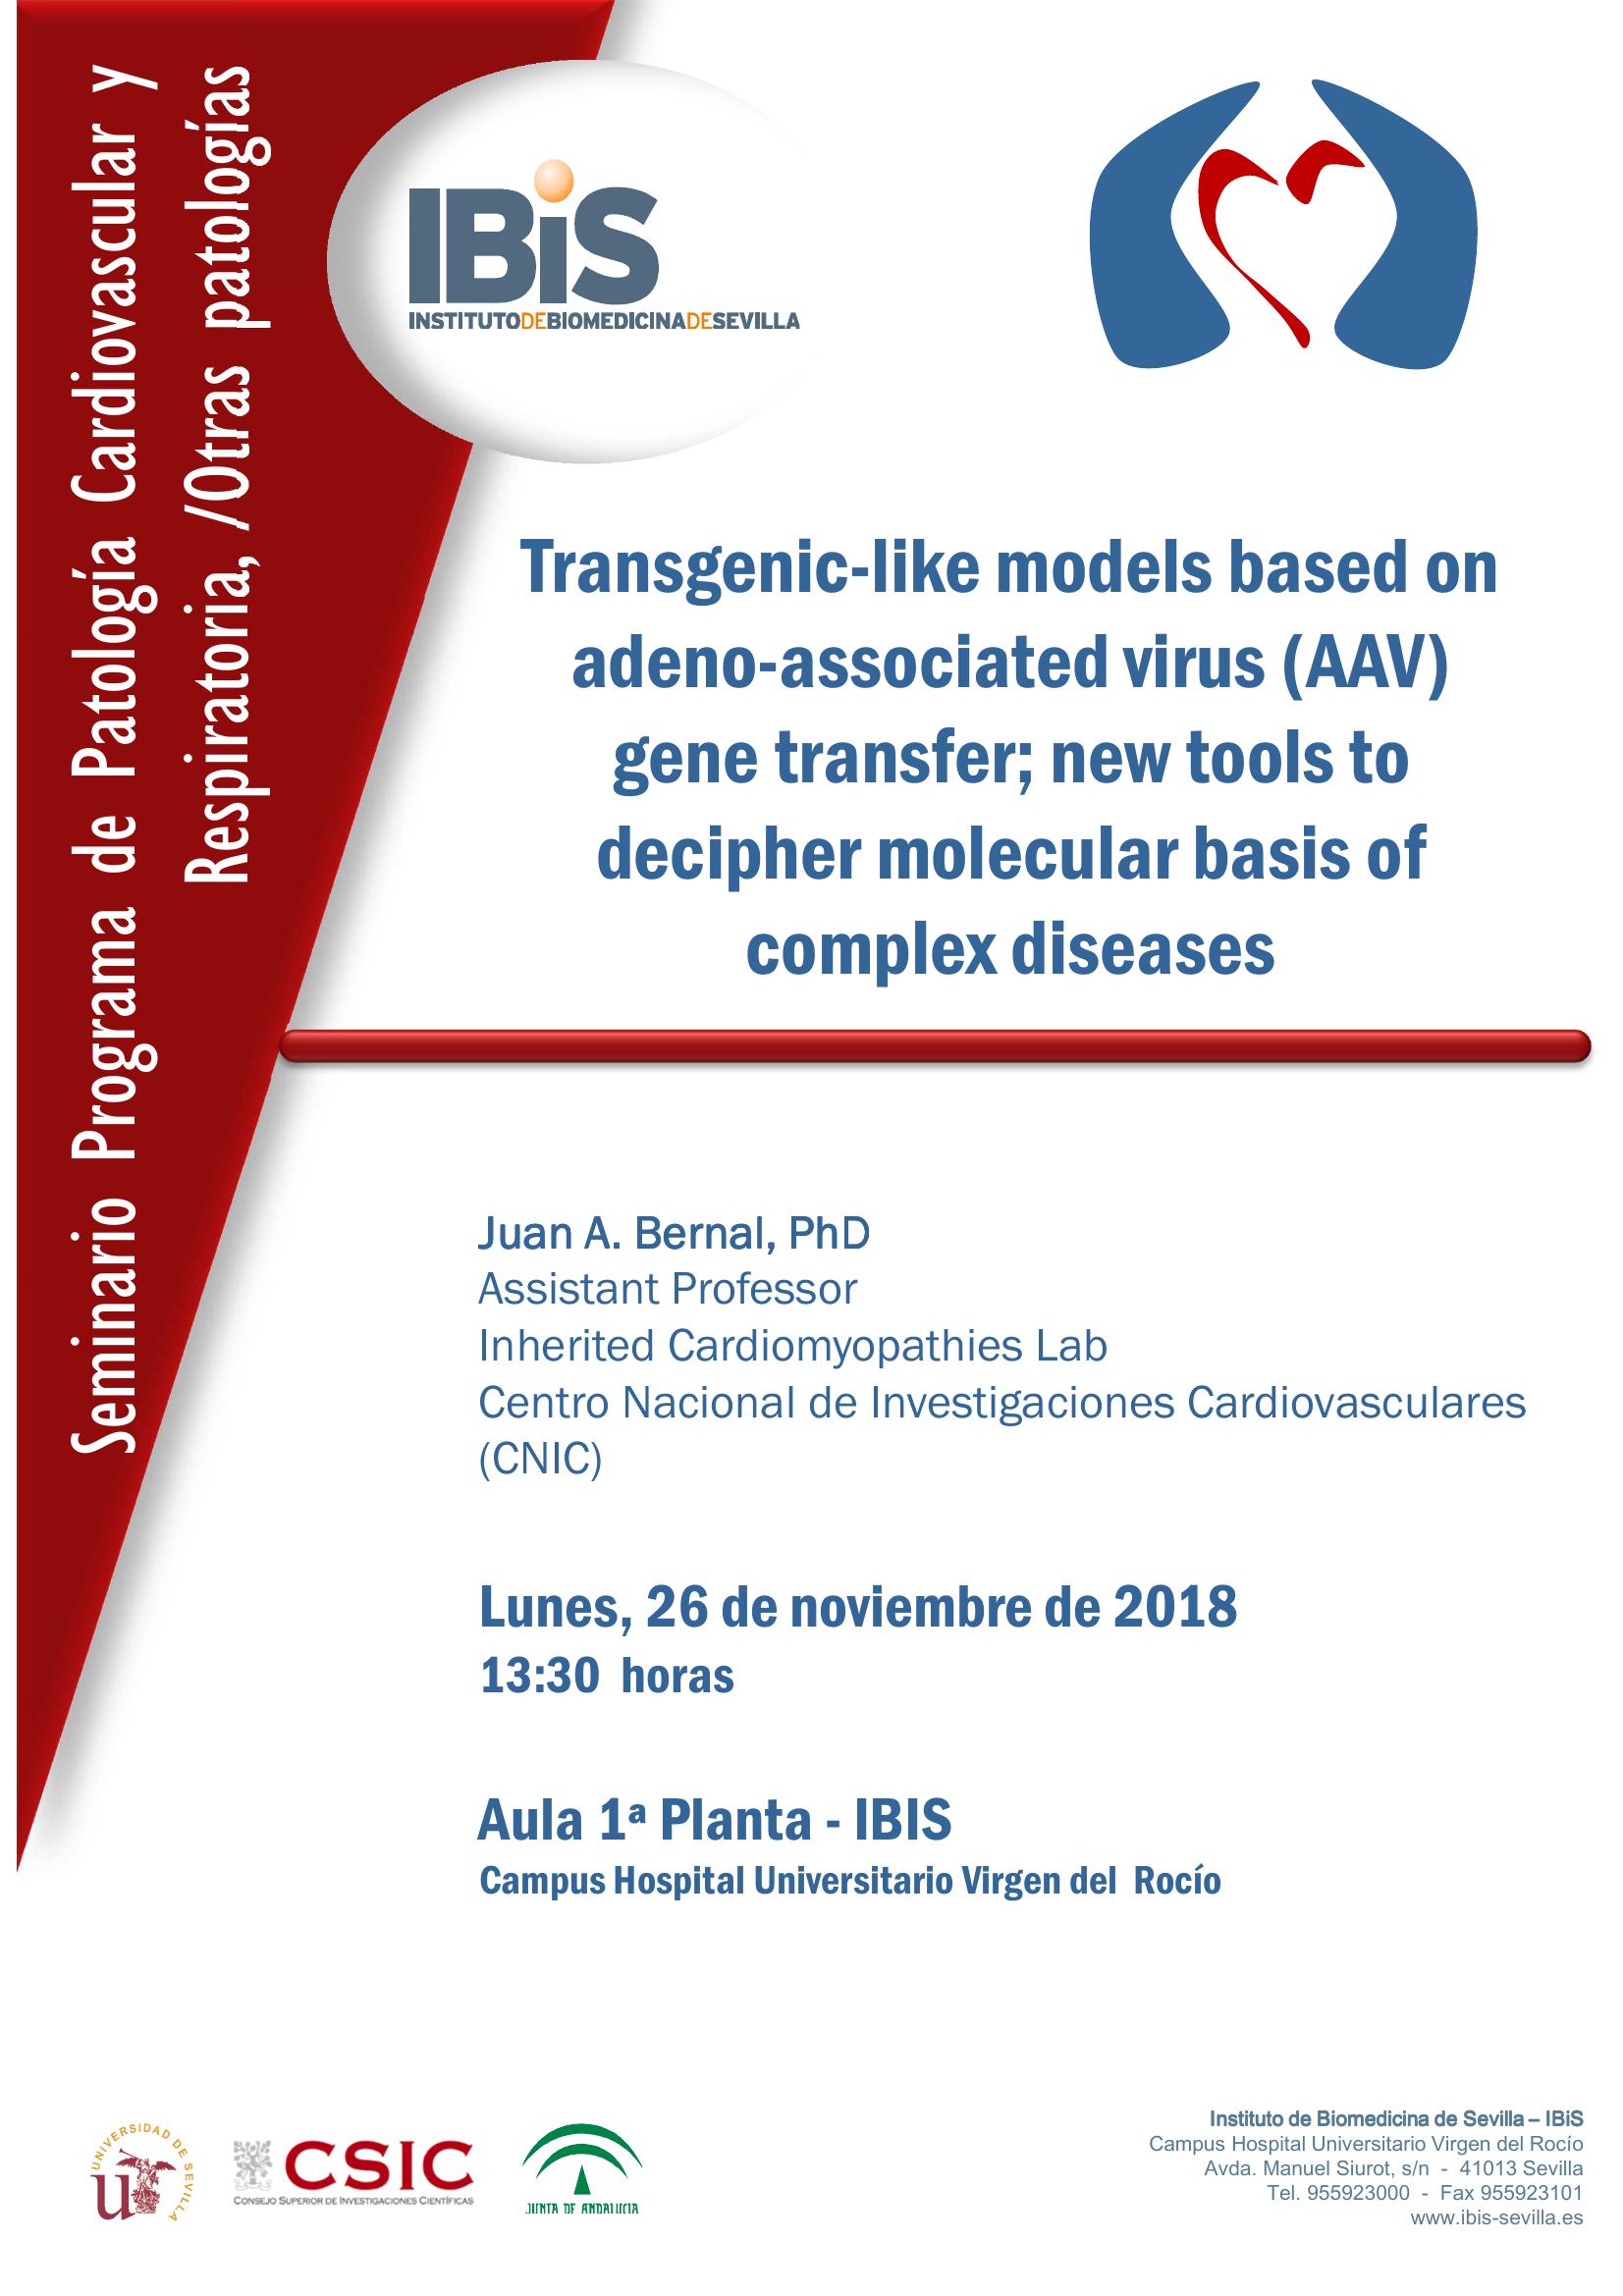 Poster: Transgenic-like models based on adeno-associated virus (AAV) gene transfer; new tools to decipher molecular basis of complex diseases